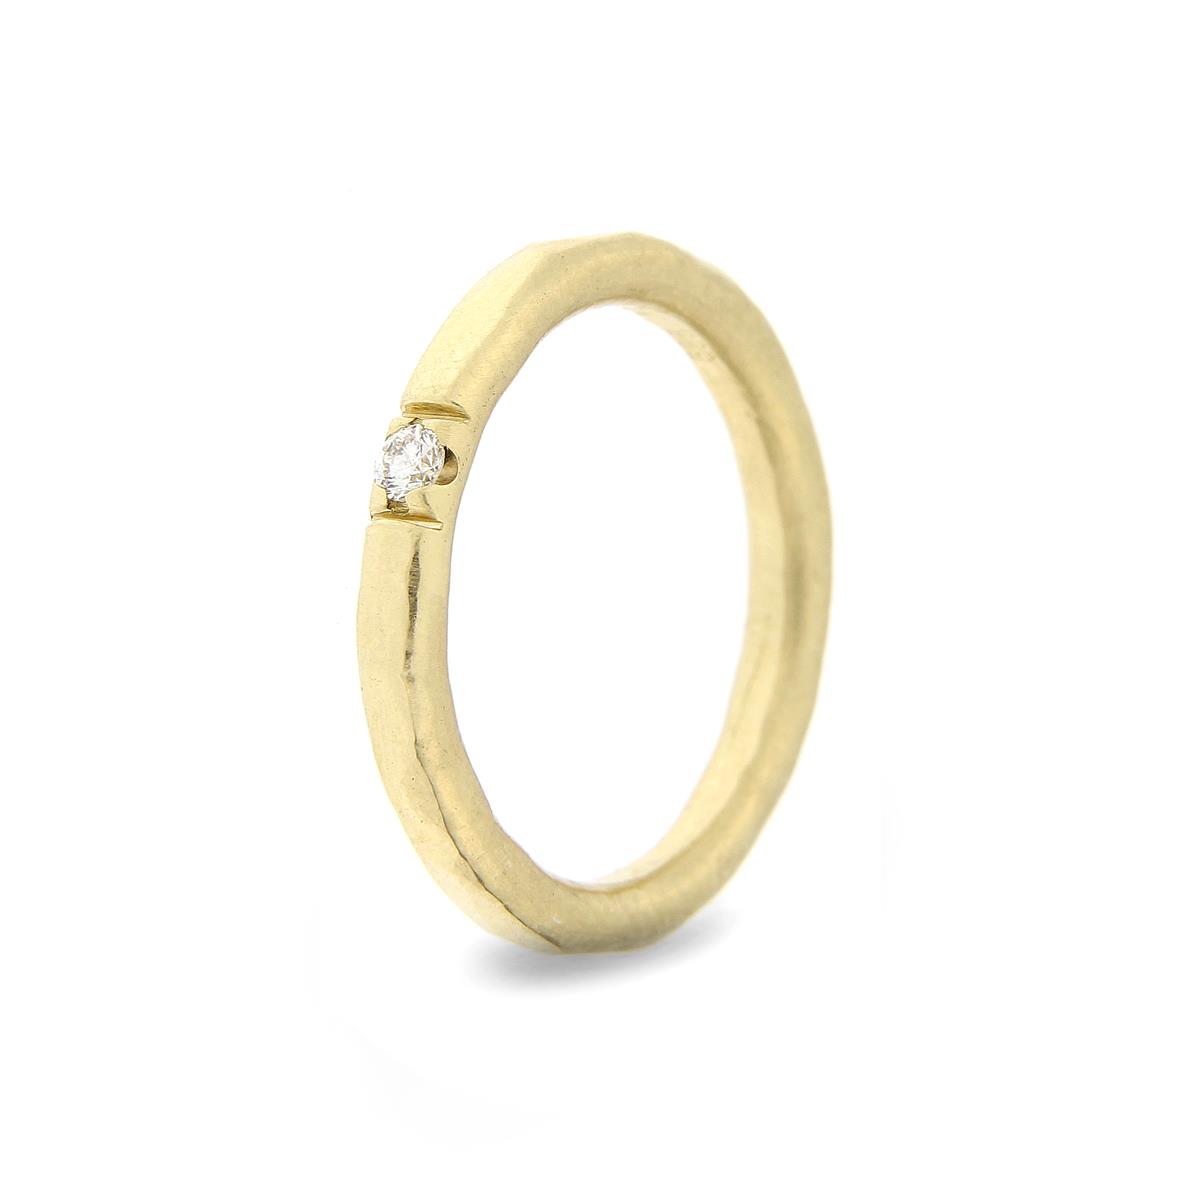 Katie g. Jewellery - aaa - Hammered Ring 2,5mm - Champagnergold 1 + 1 Diamond